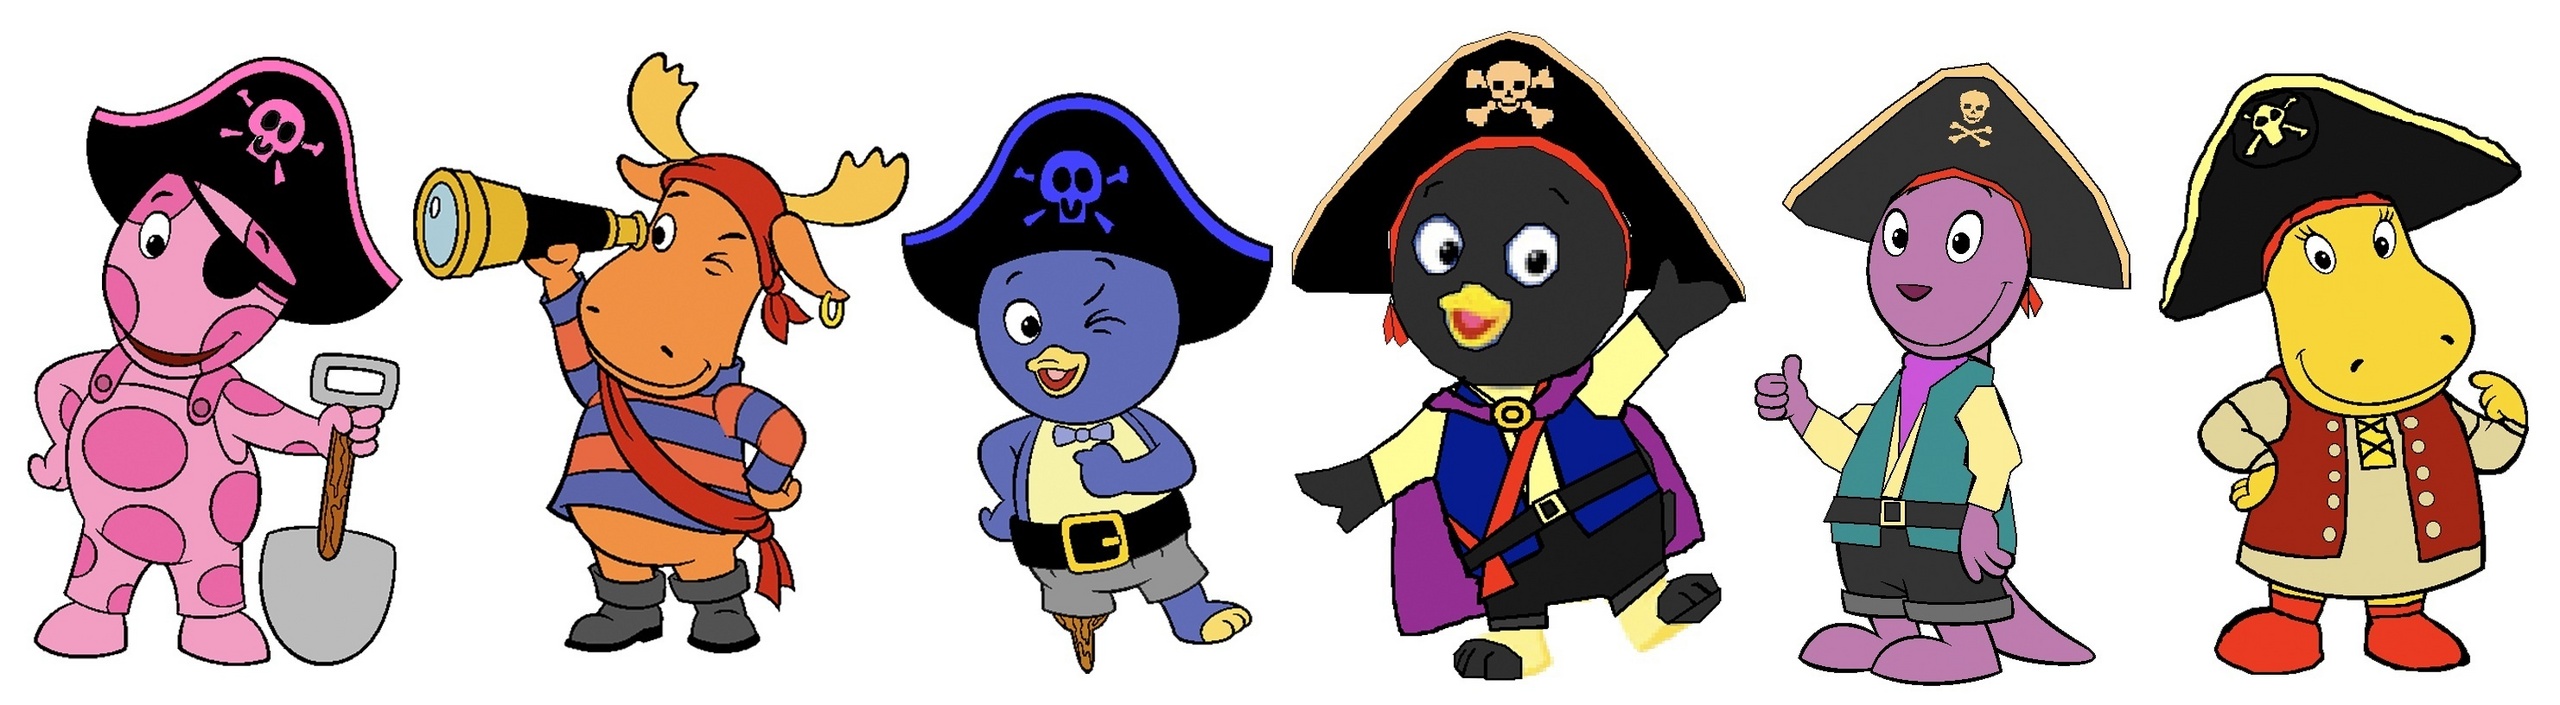 The Backyardigans Fan Art: Pirates.